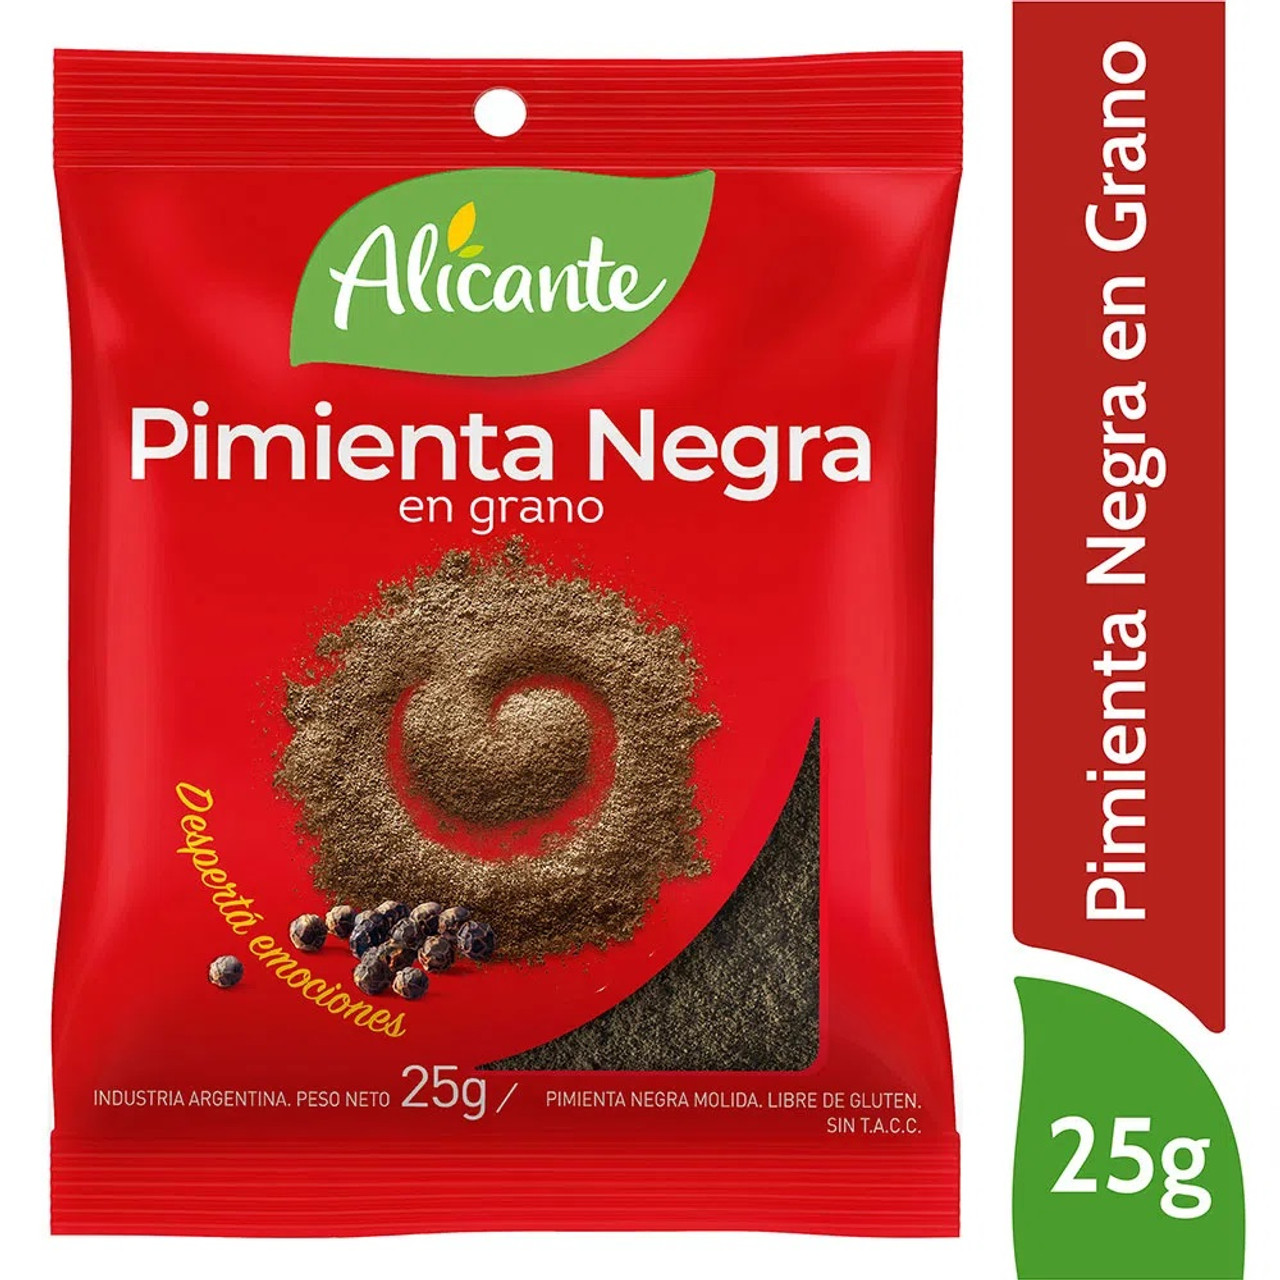 Alicante Pimienta Negra Molida Ground Black Pepper, 25 g / 0.88 oz pouch  (pack of 3)